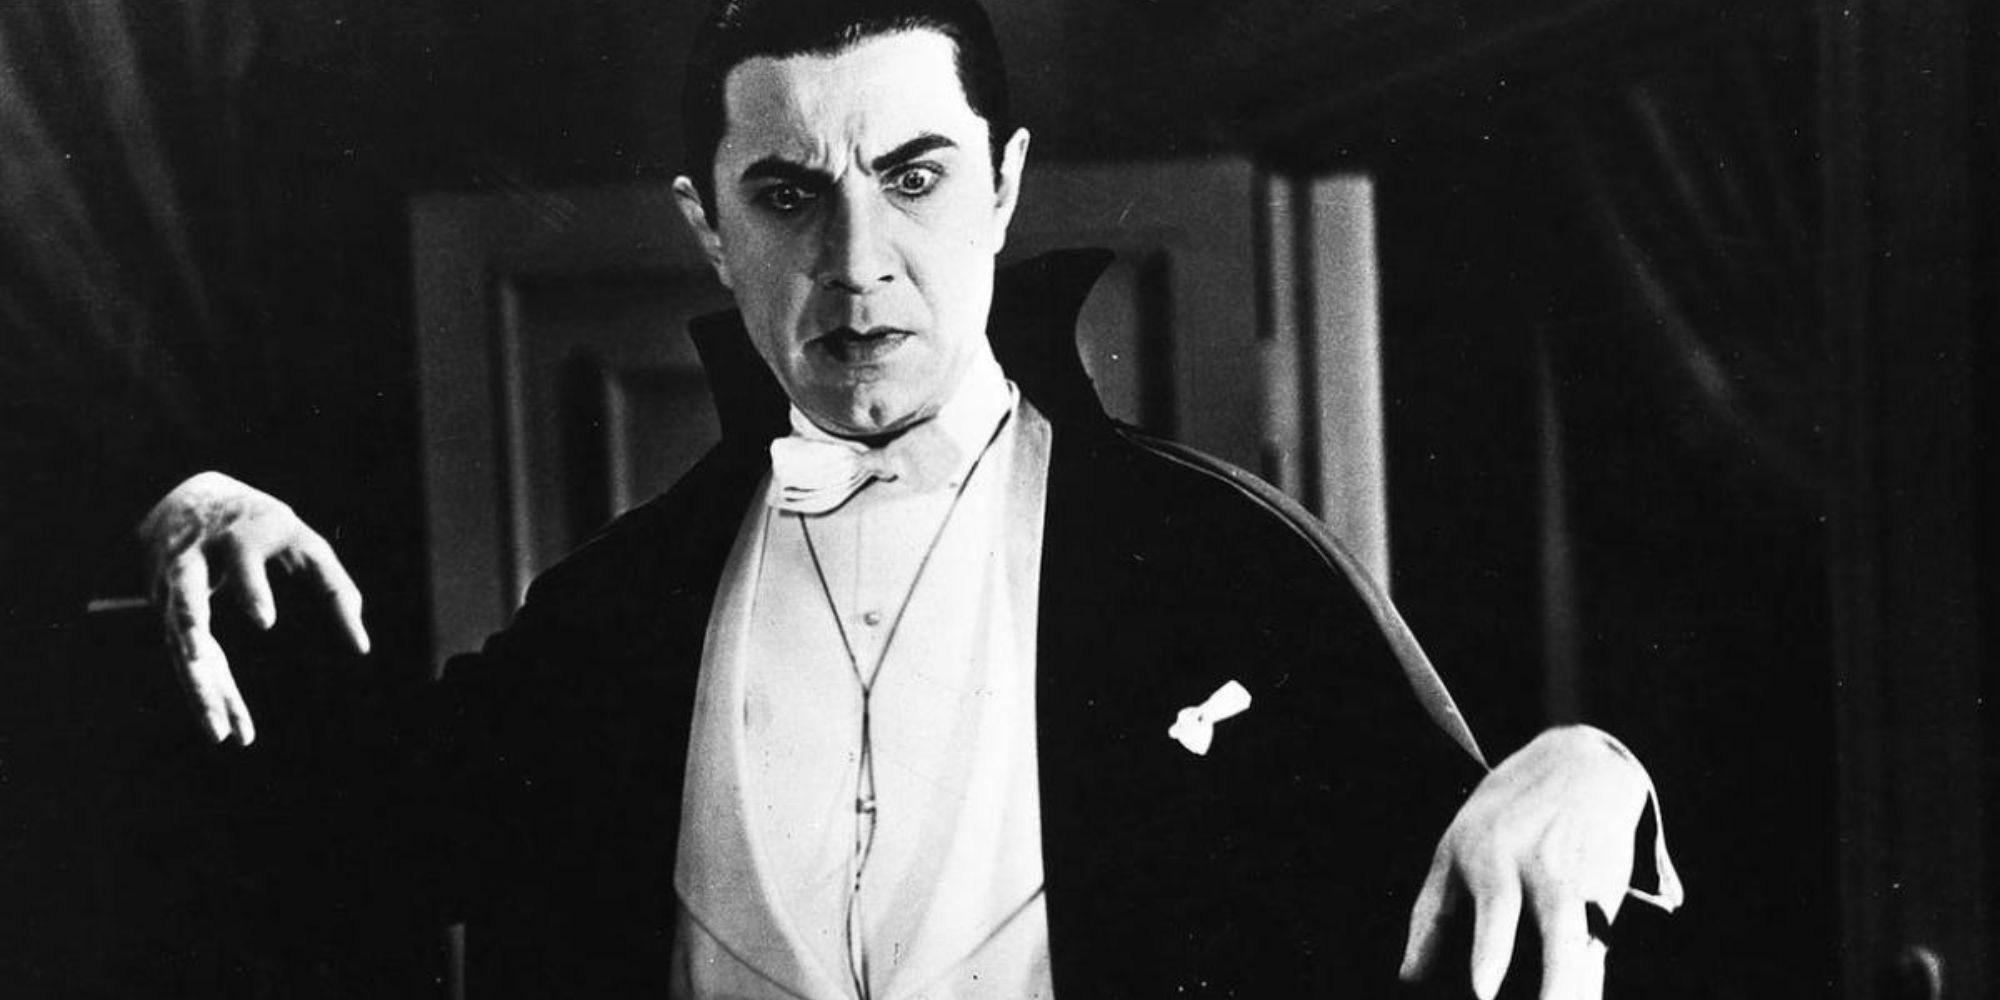 Bela Lugosi as Dracula in the 1931 film